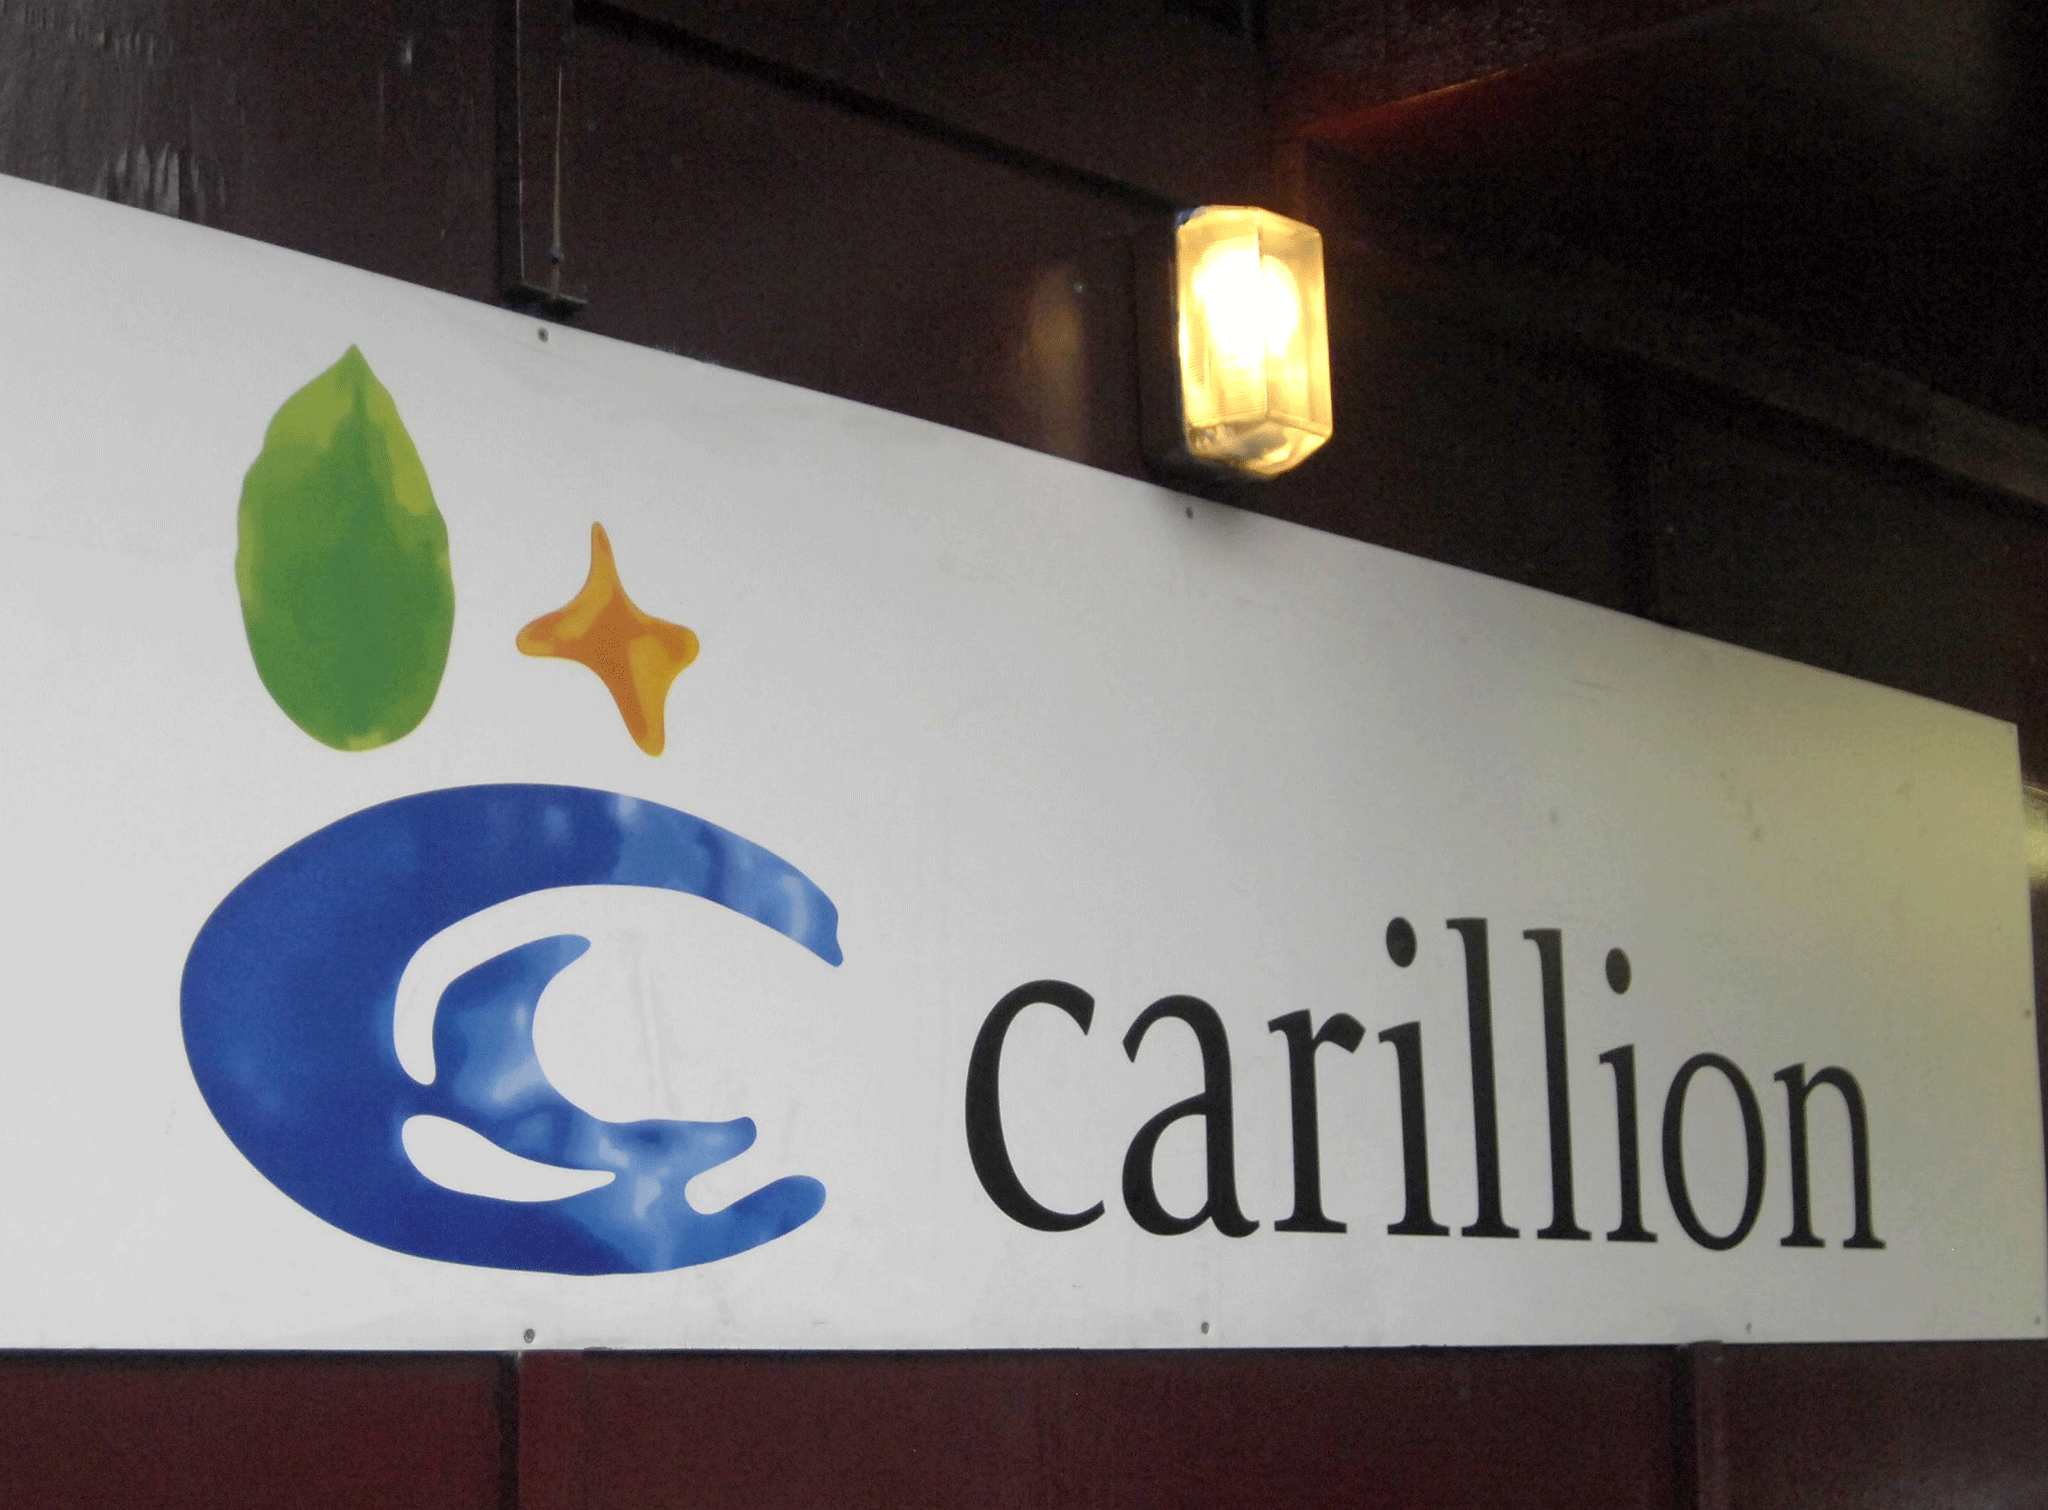 Construction firm Carillion under investigation by financial watchdog